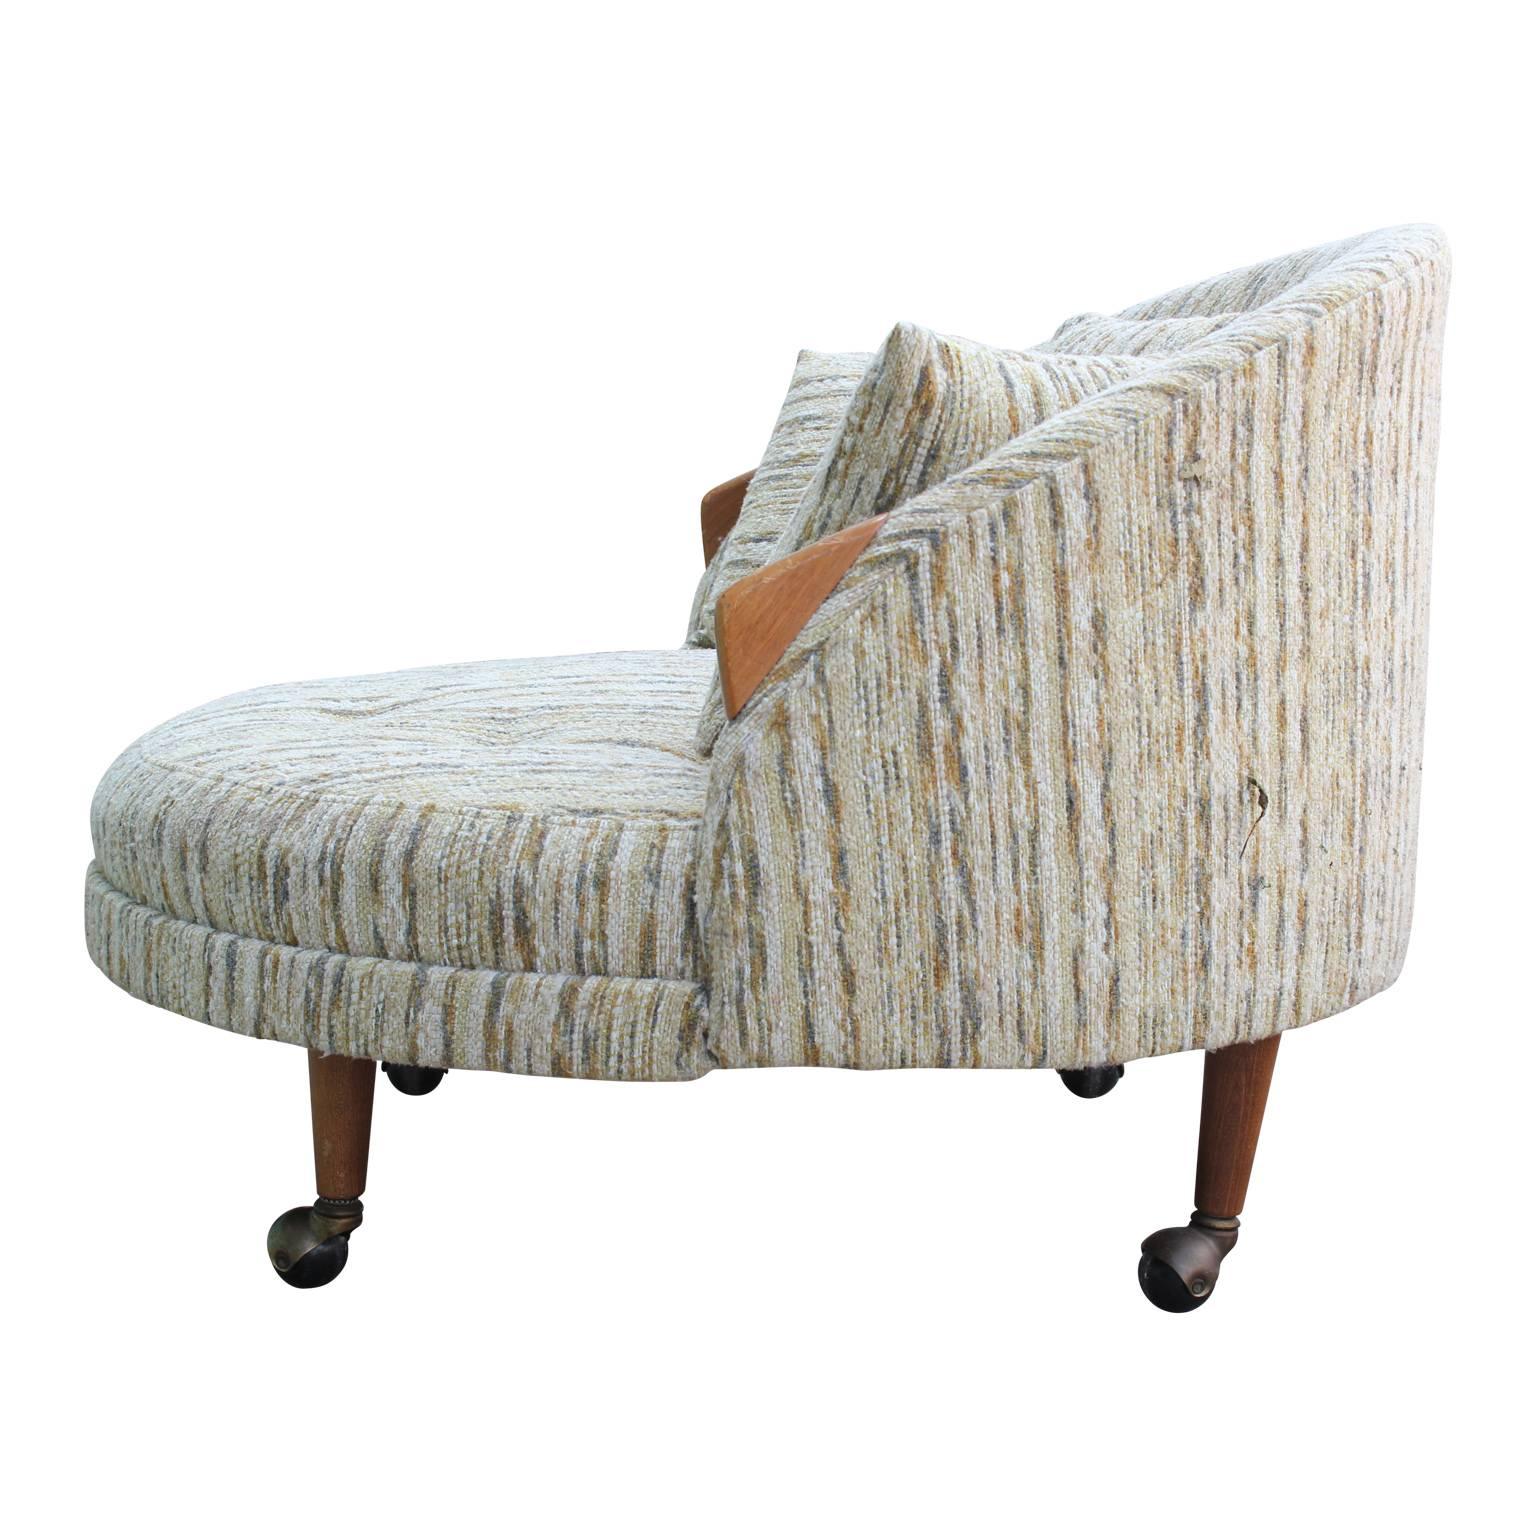 American Modern Adrian Pearsall Havana Chair in Original Fabric